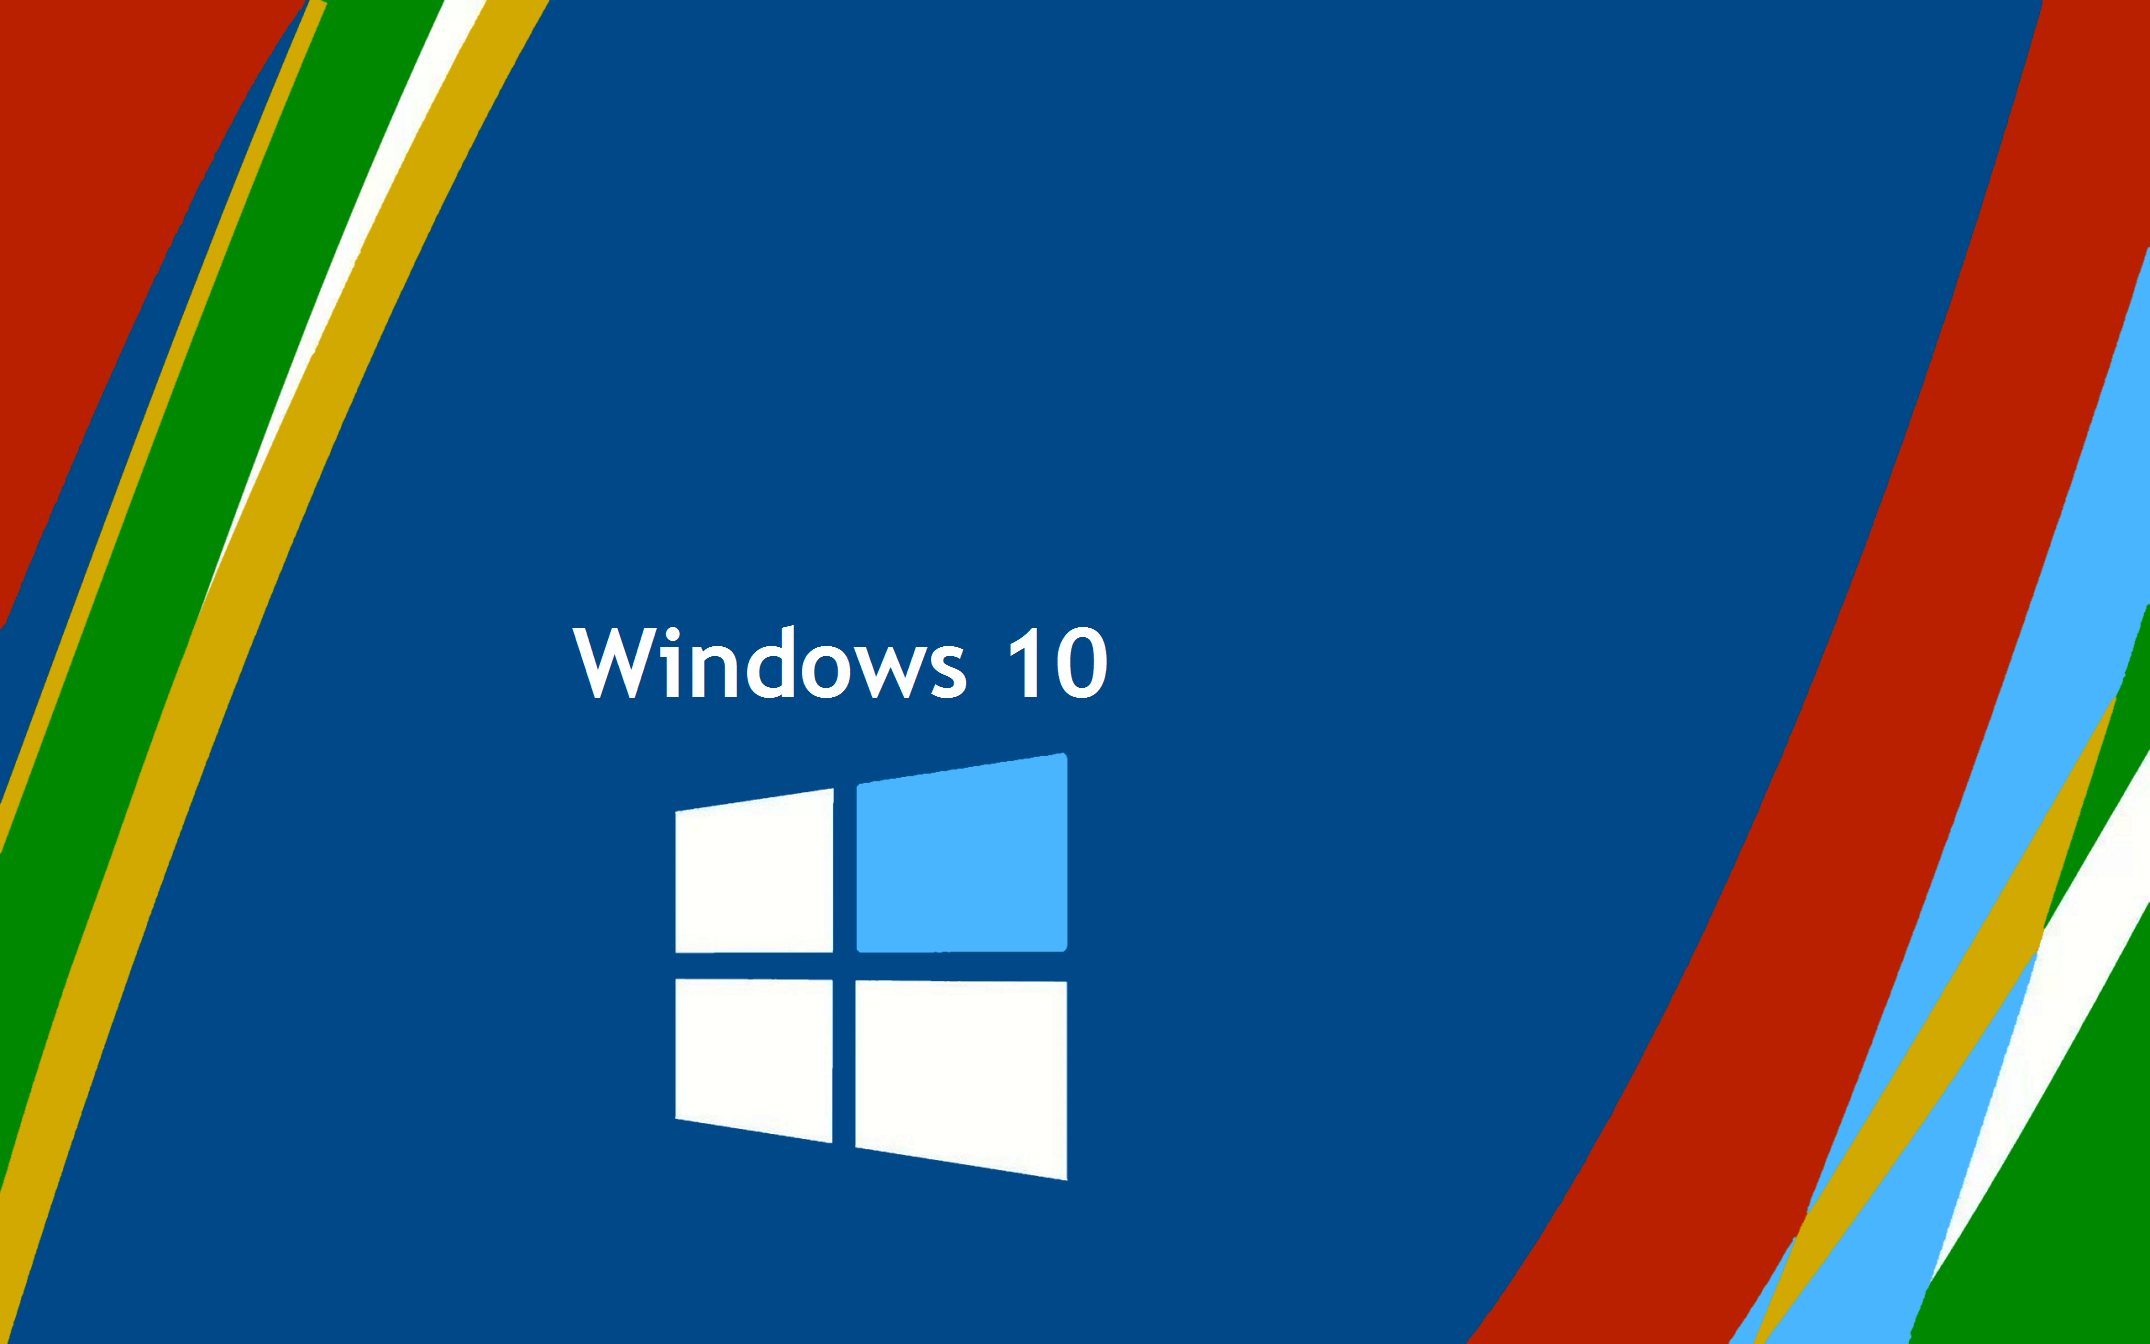 Windows 10 Colorful Full HD Wallpaper. Full HD wallpaper, Windows Windows